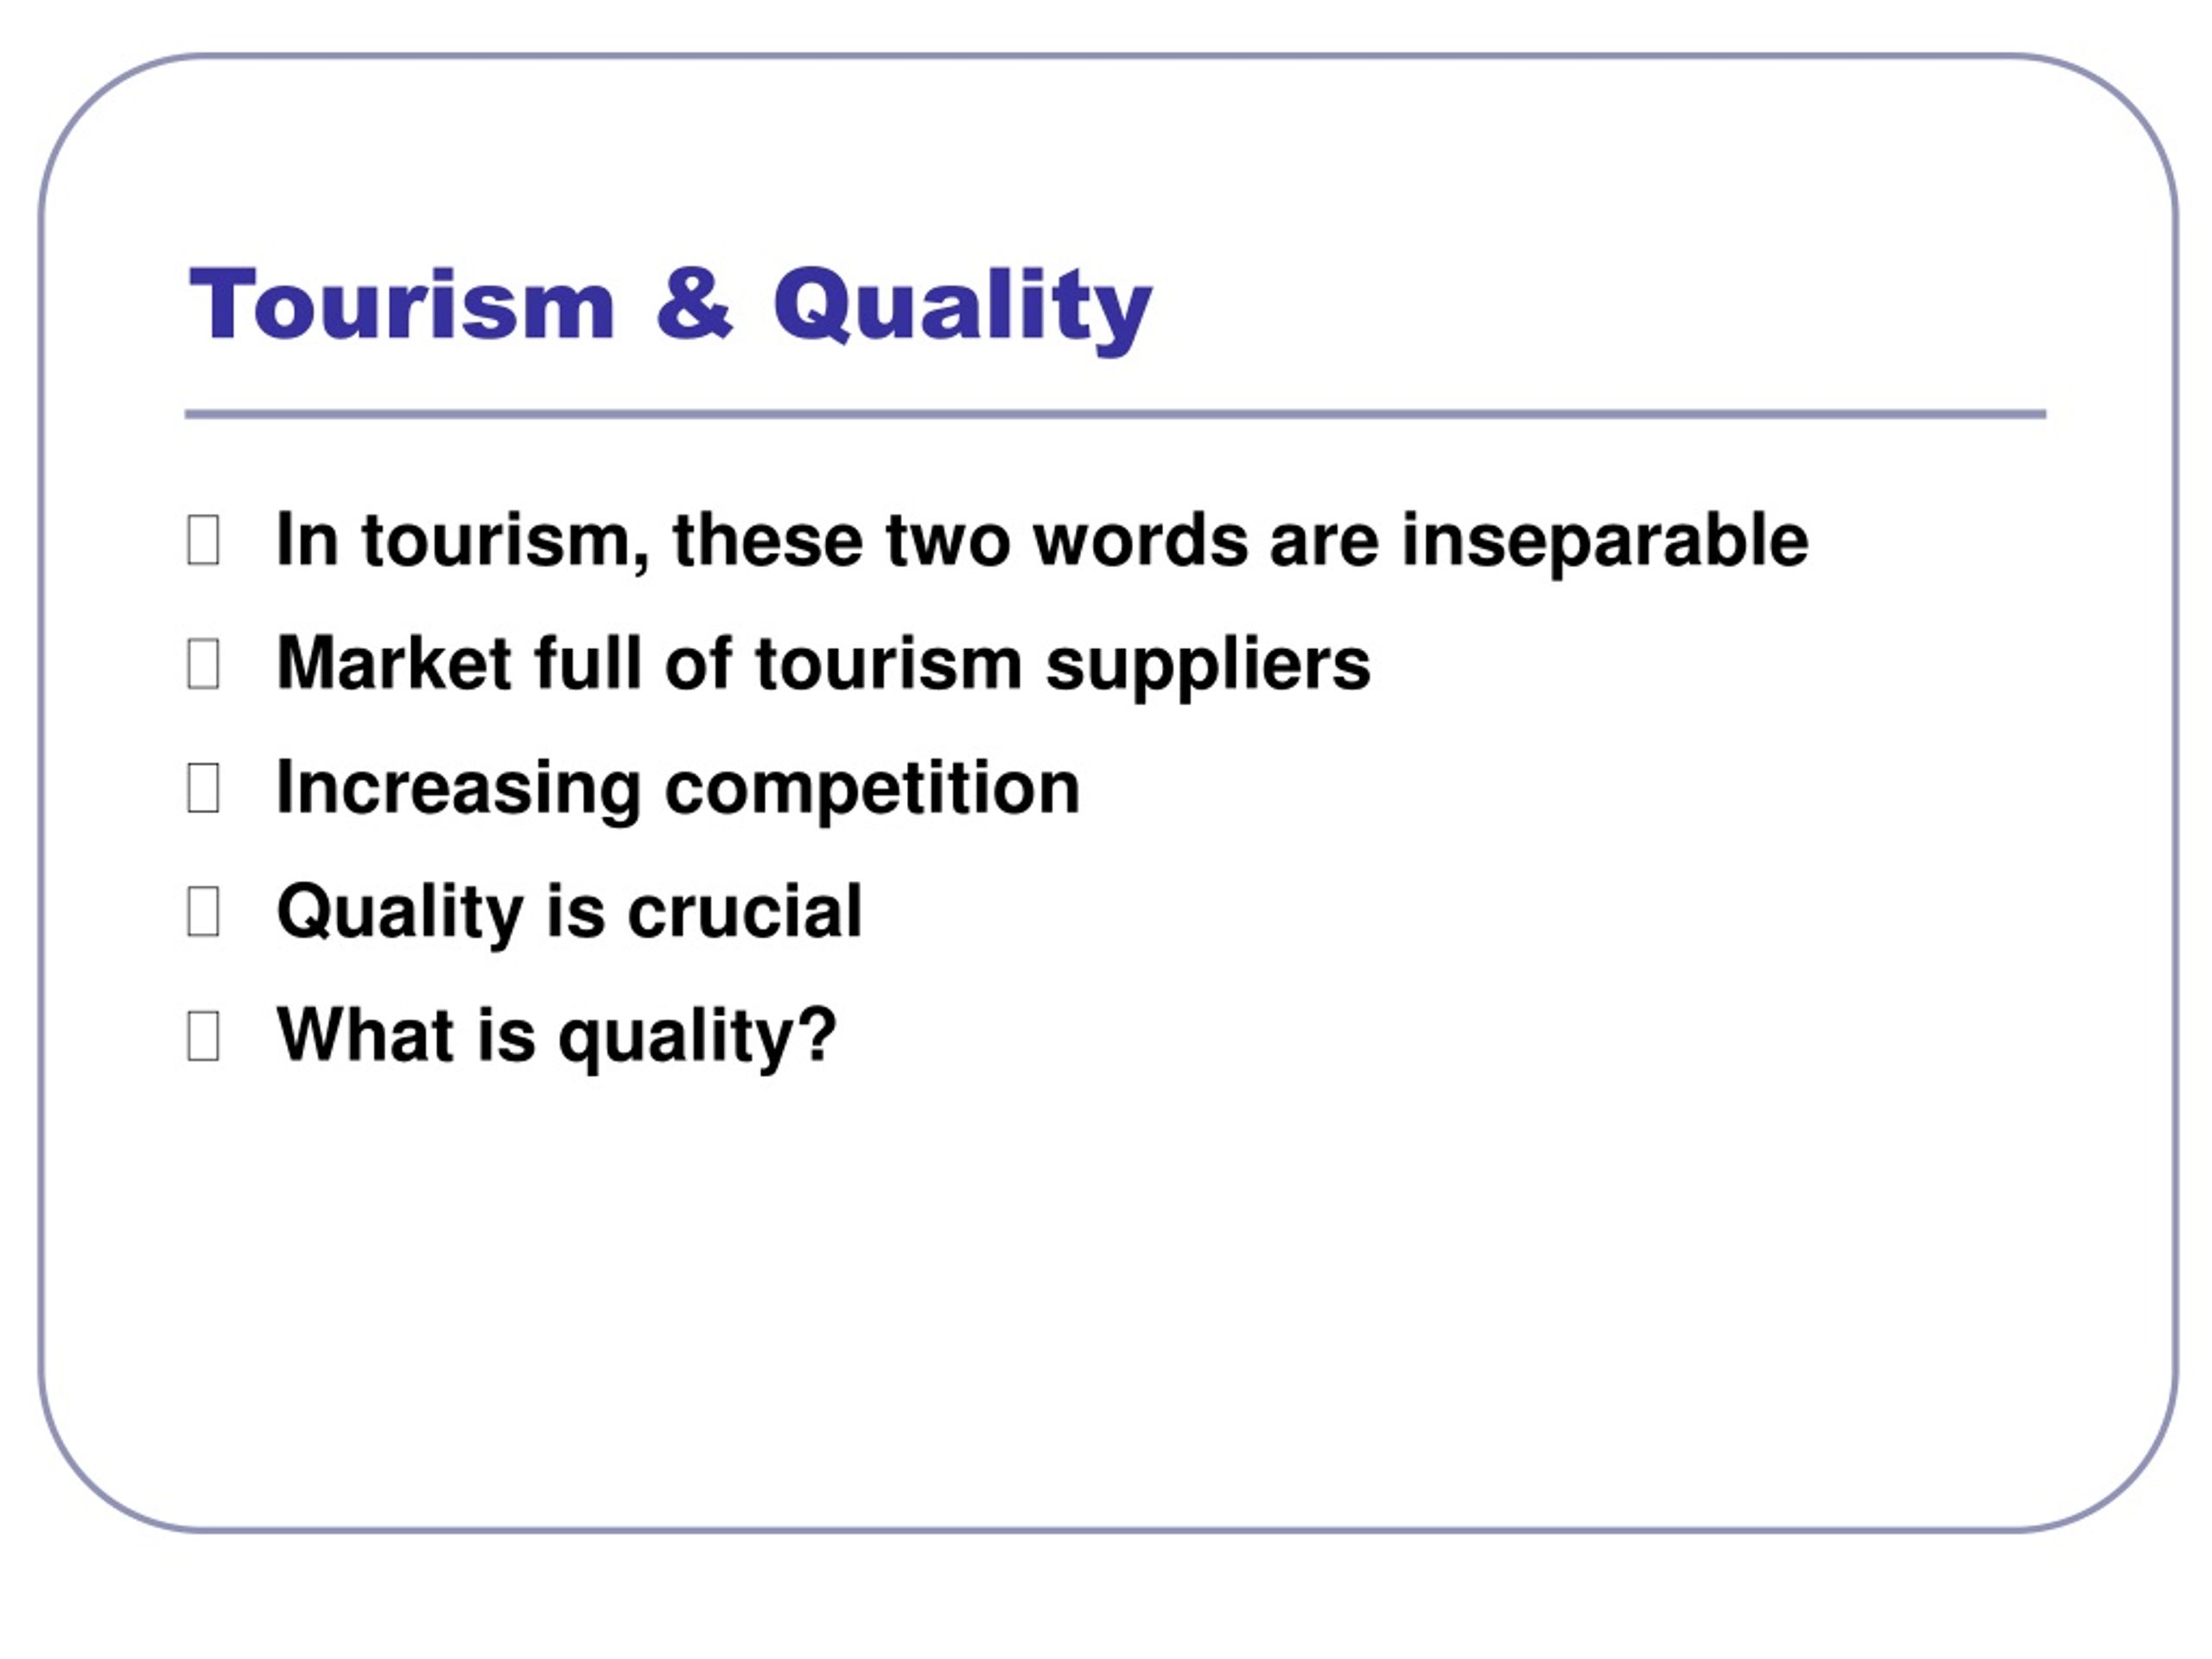 quality tourism definition